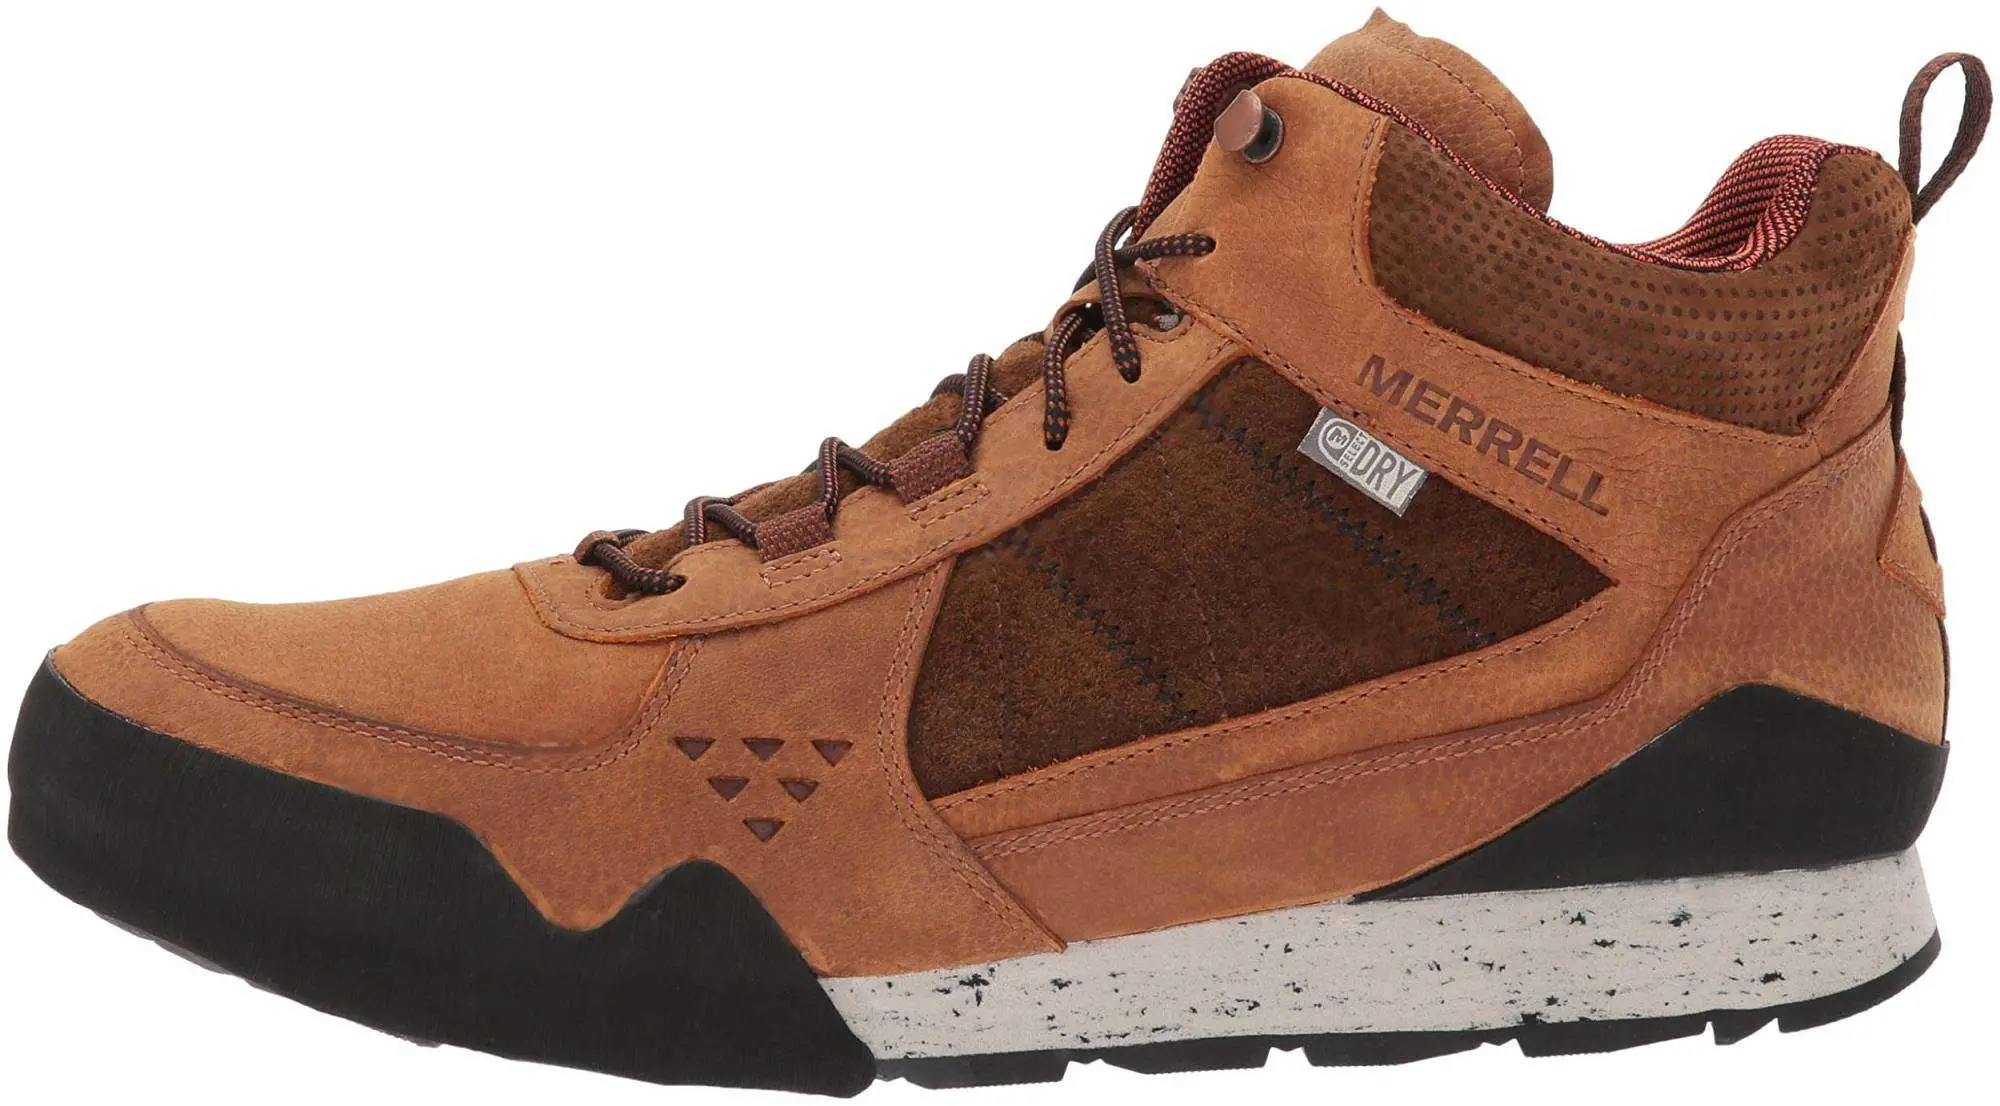 Merrell Burnt Rock Mid Waterproof  Shoes Reviews ...